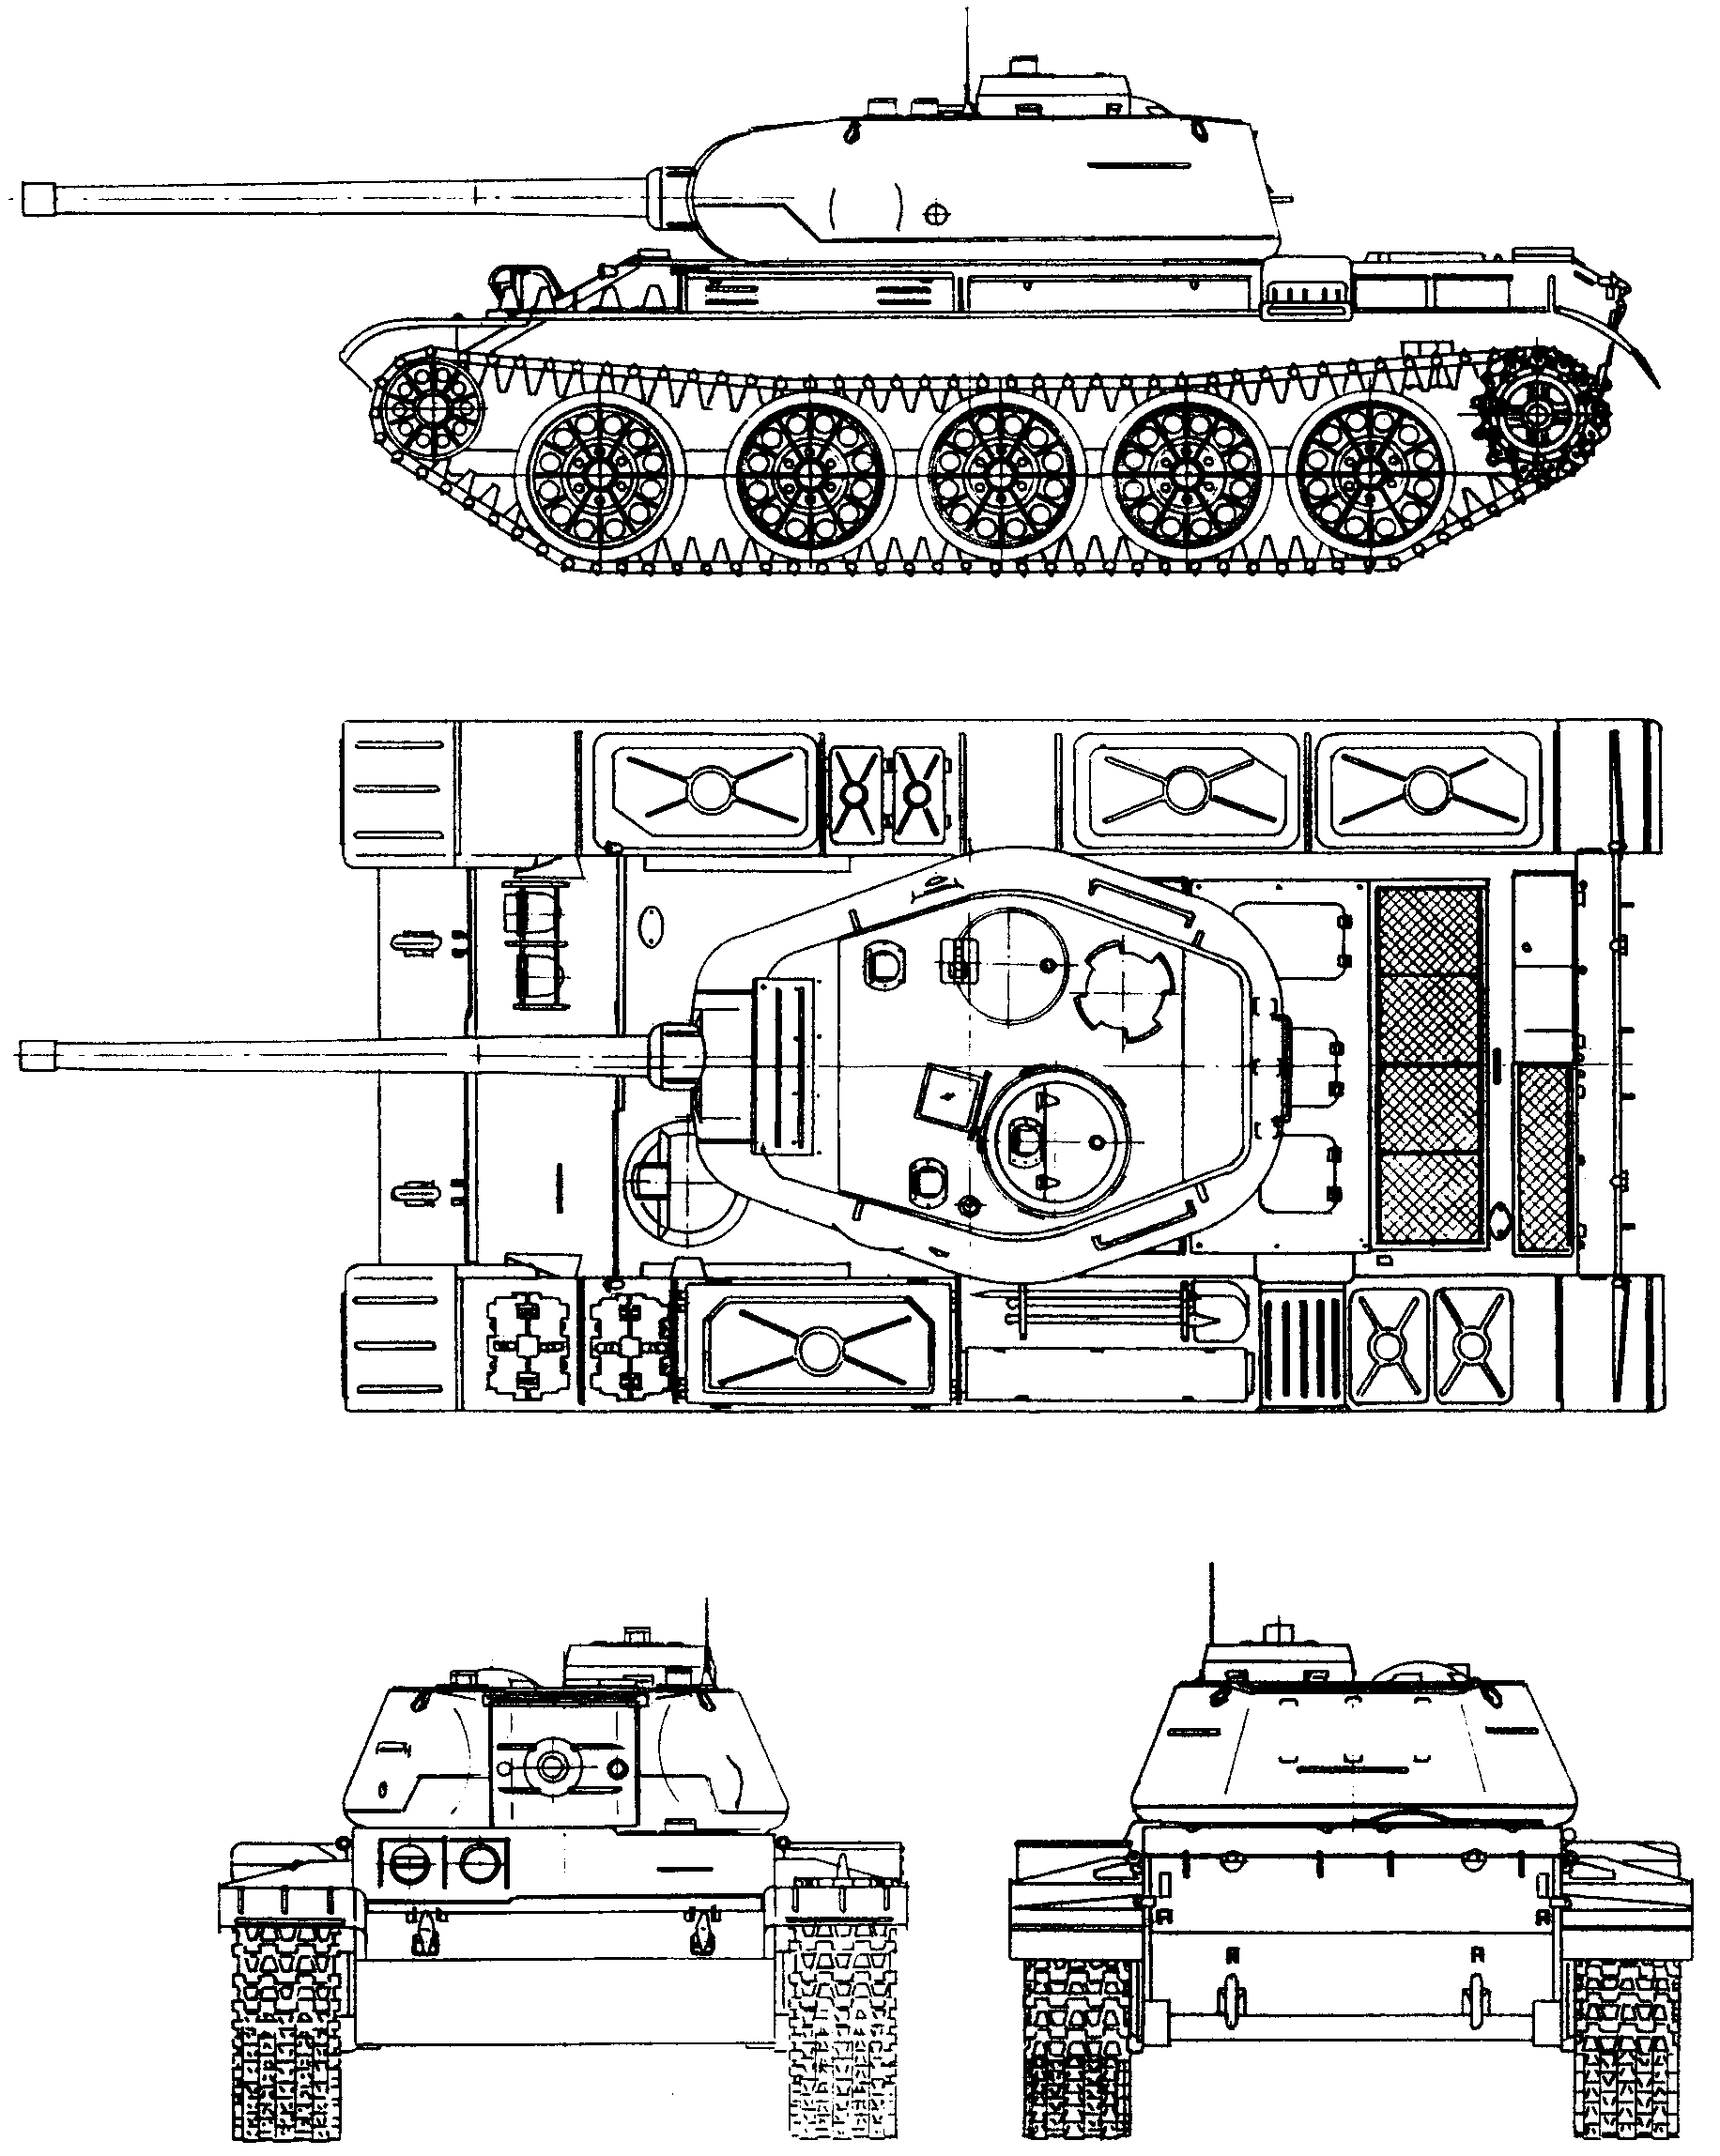 T-44 blueprint